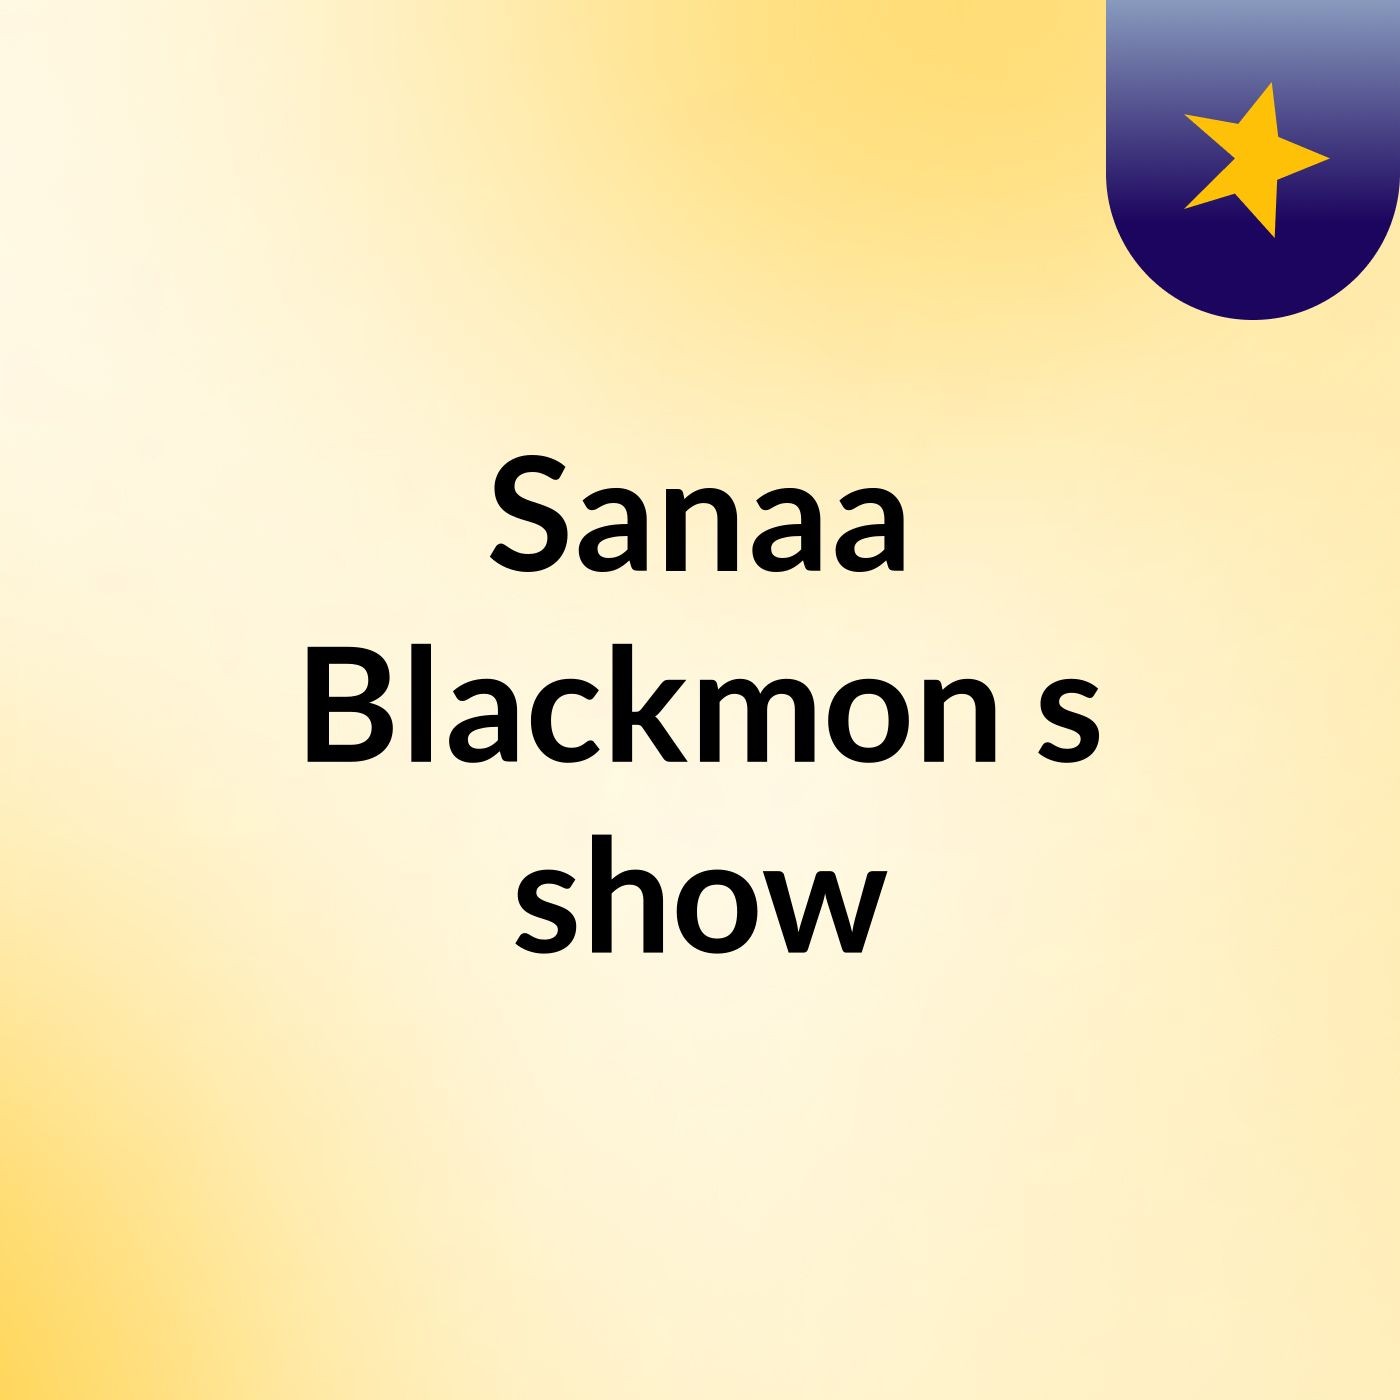 Sanaa Blackmon's show